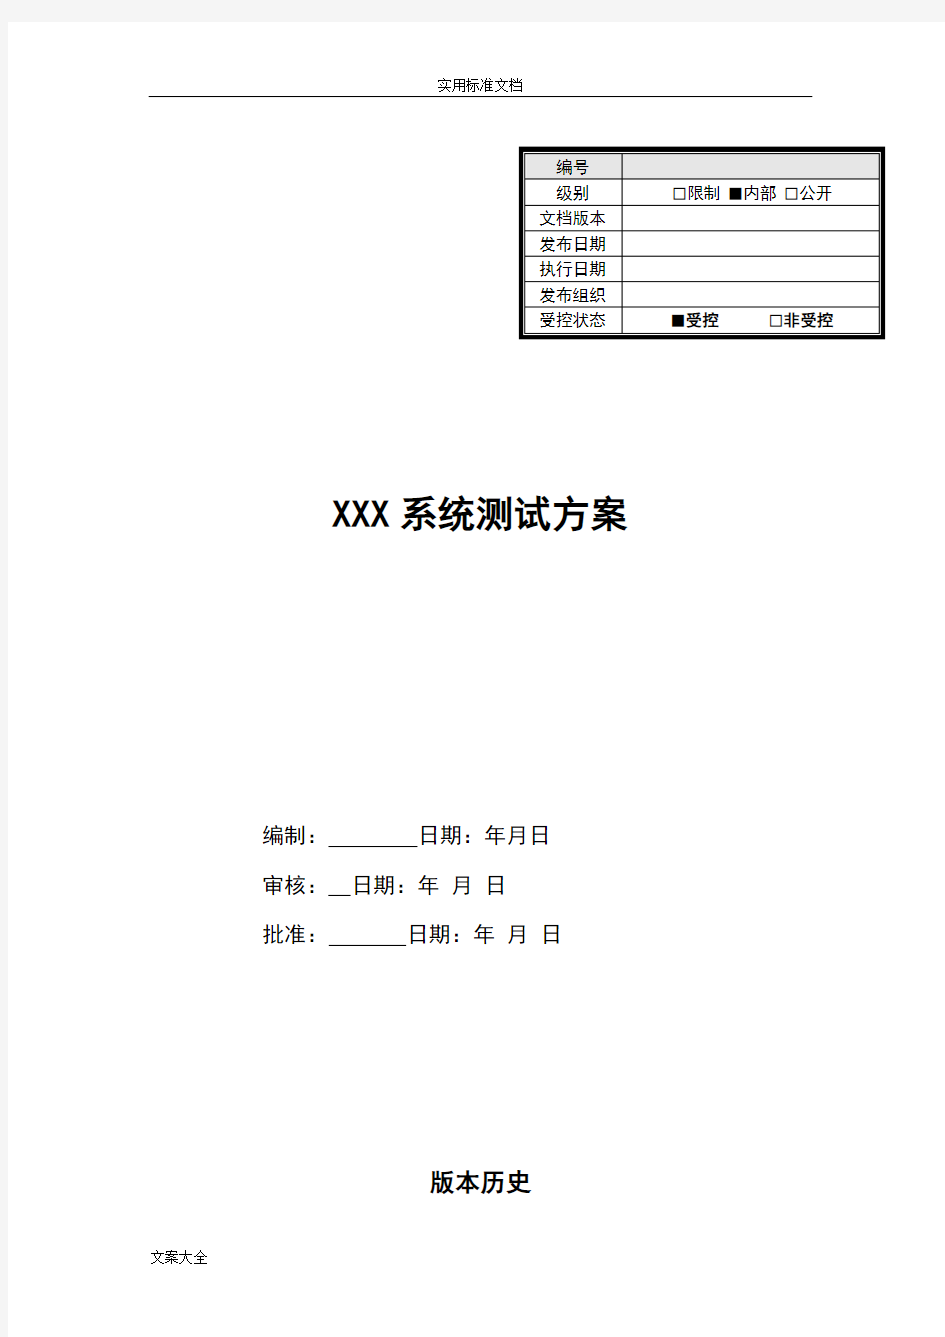 xxx系统总体测试方案设计